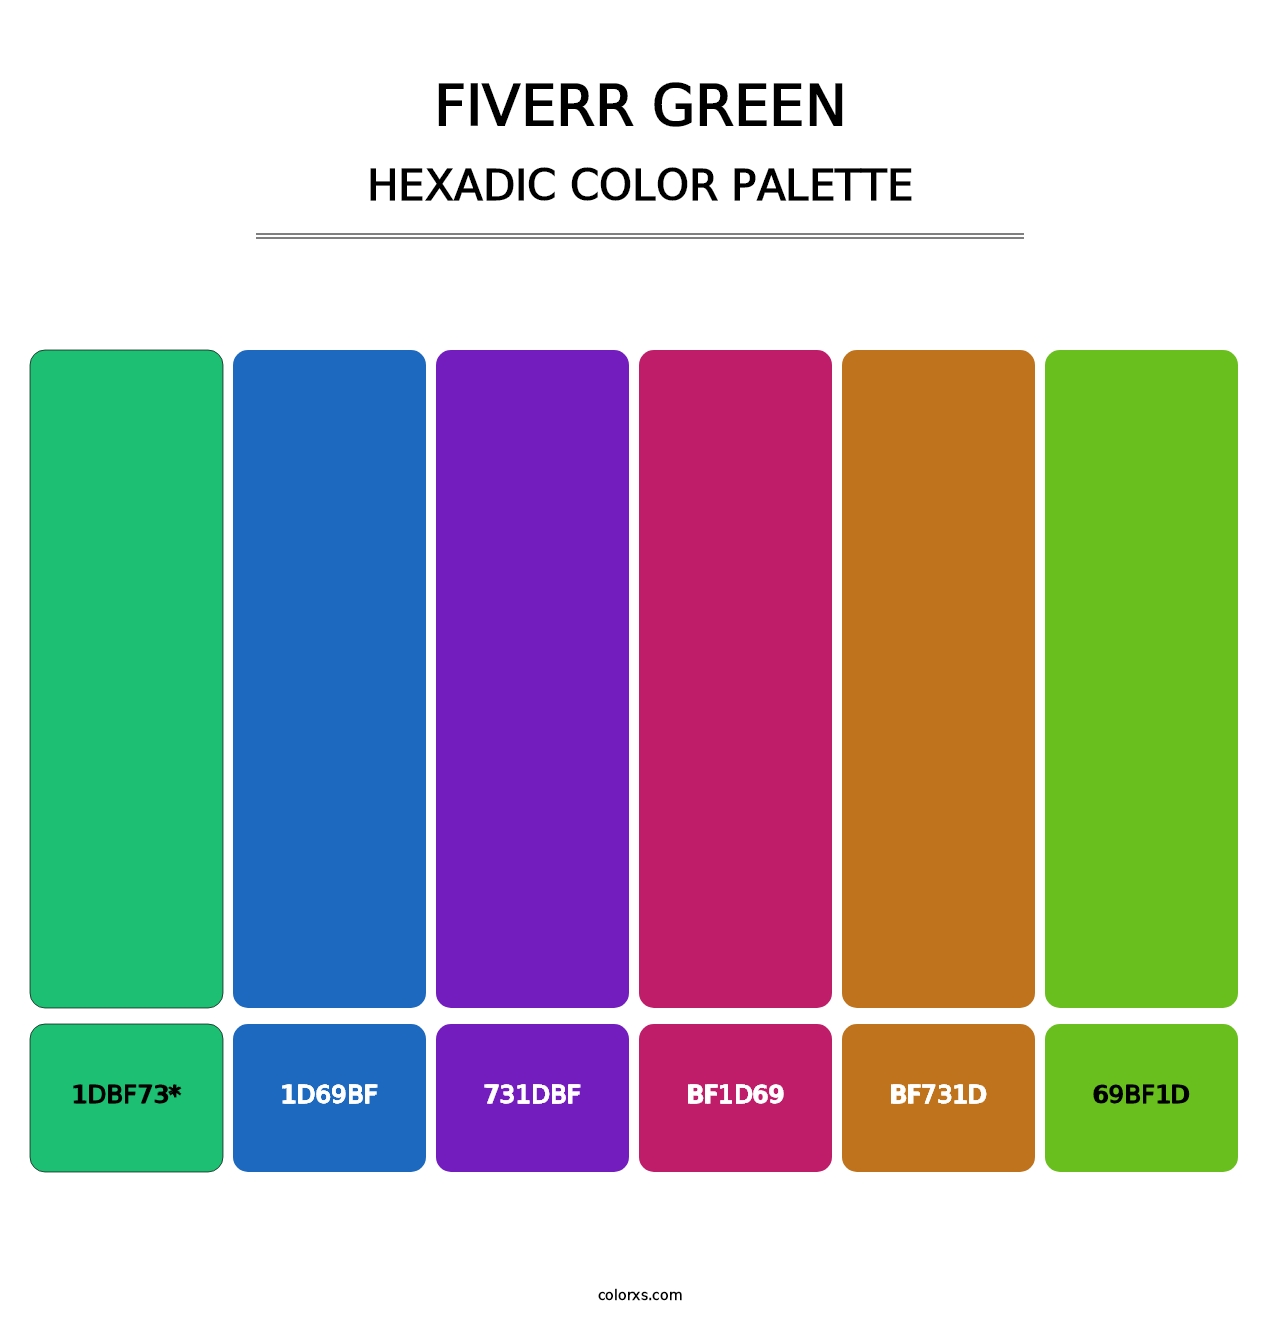 Fiverr Green - Hexadic Color Palette